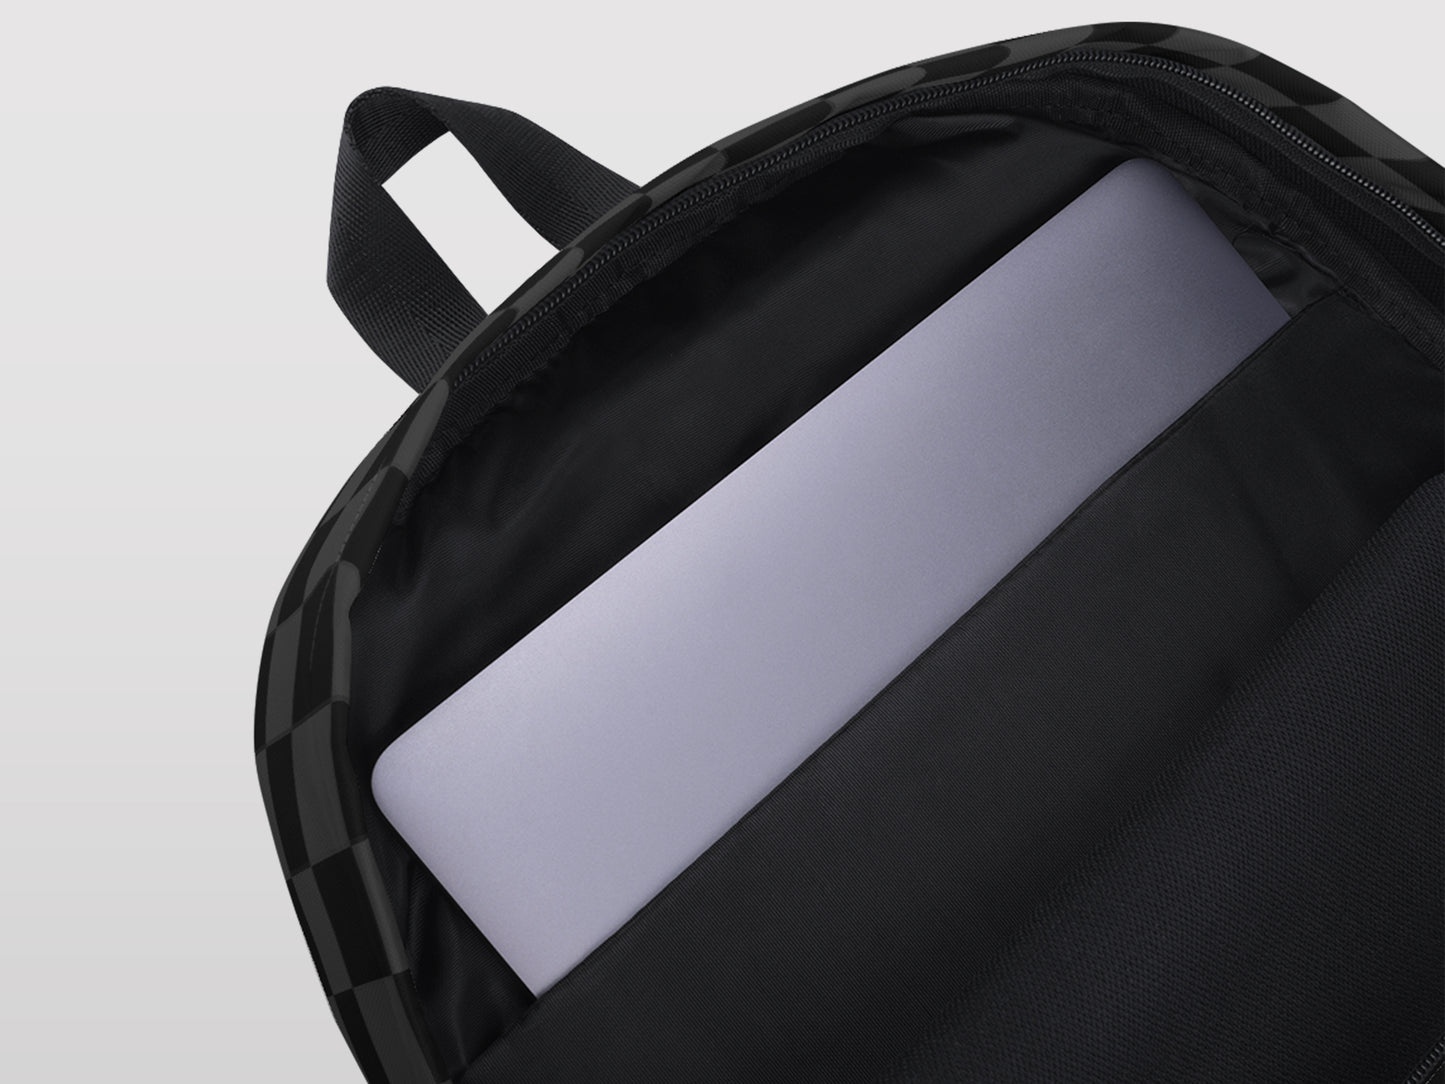 Black Tonal Checkered Backpack